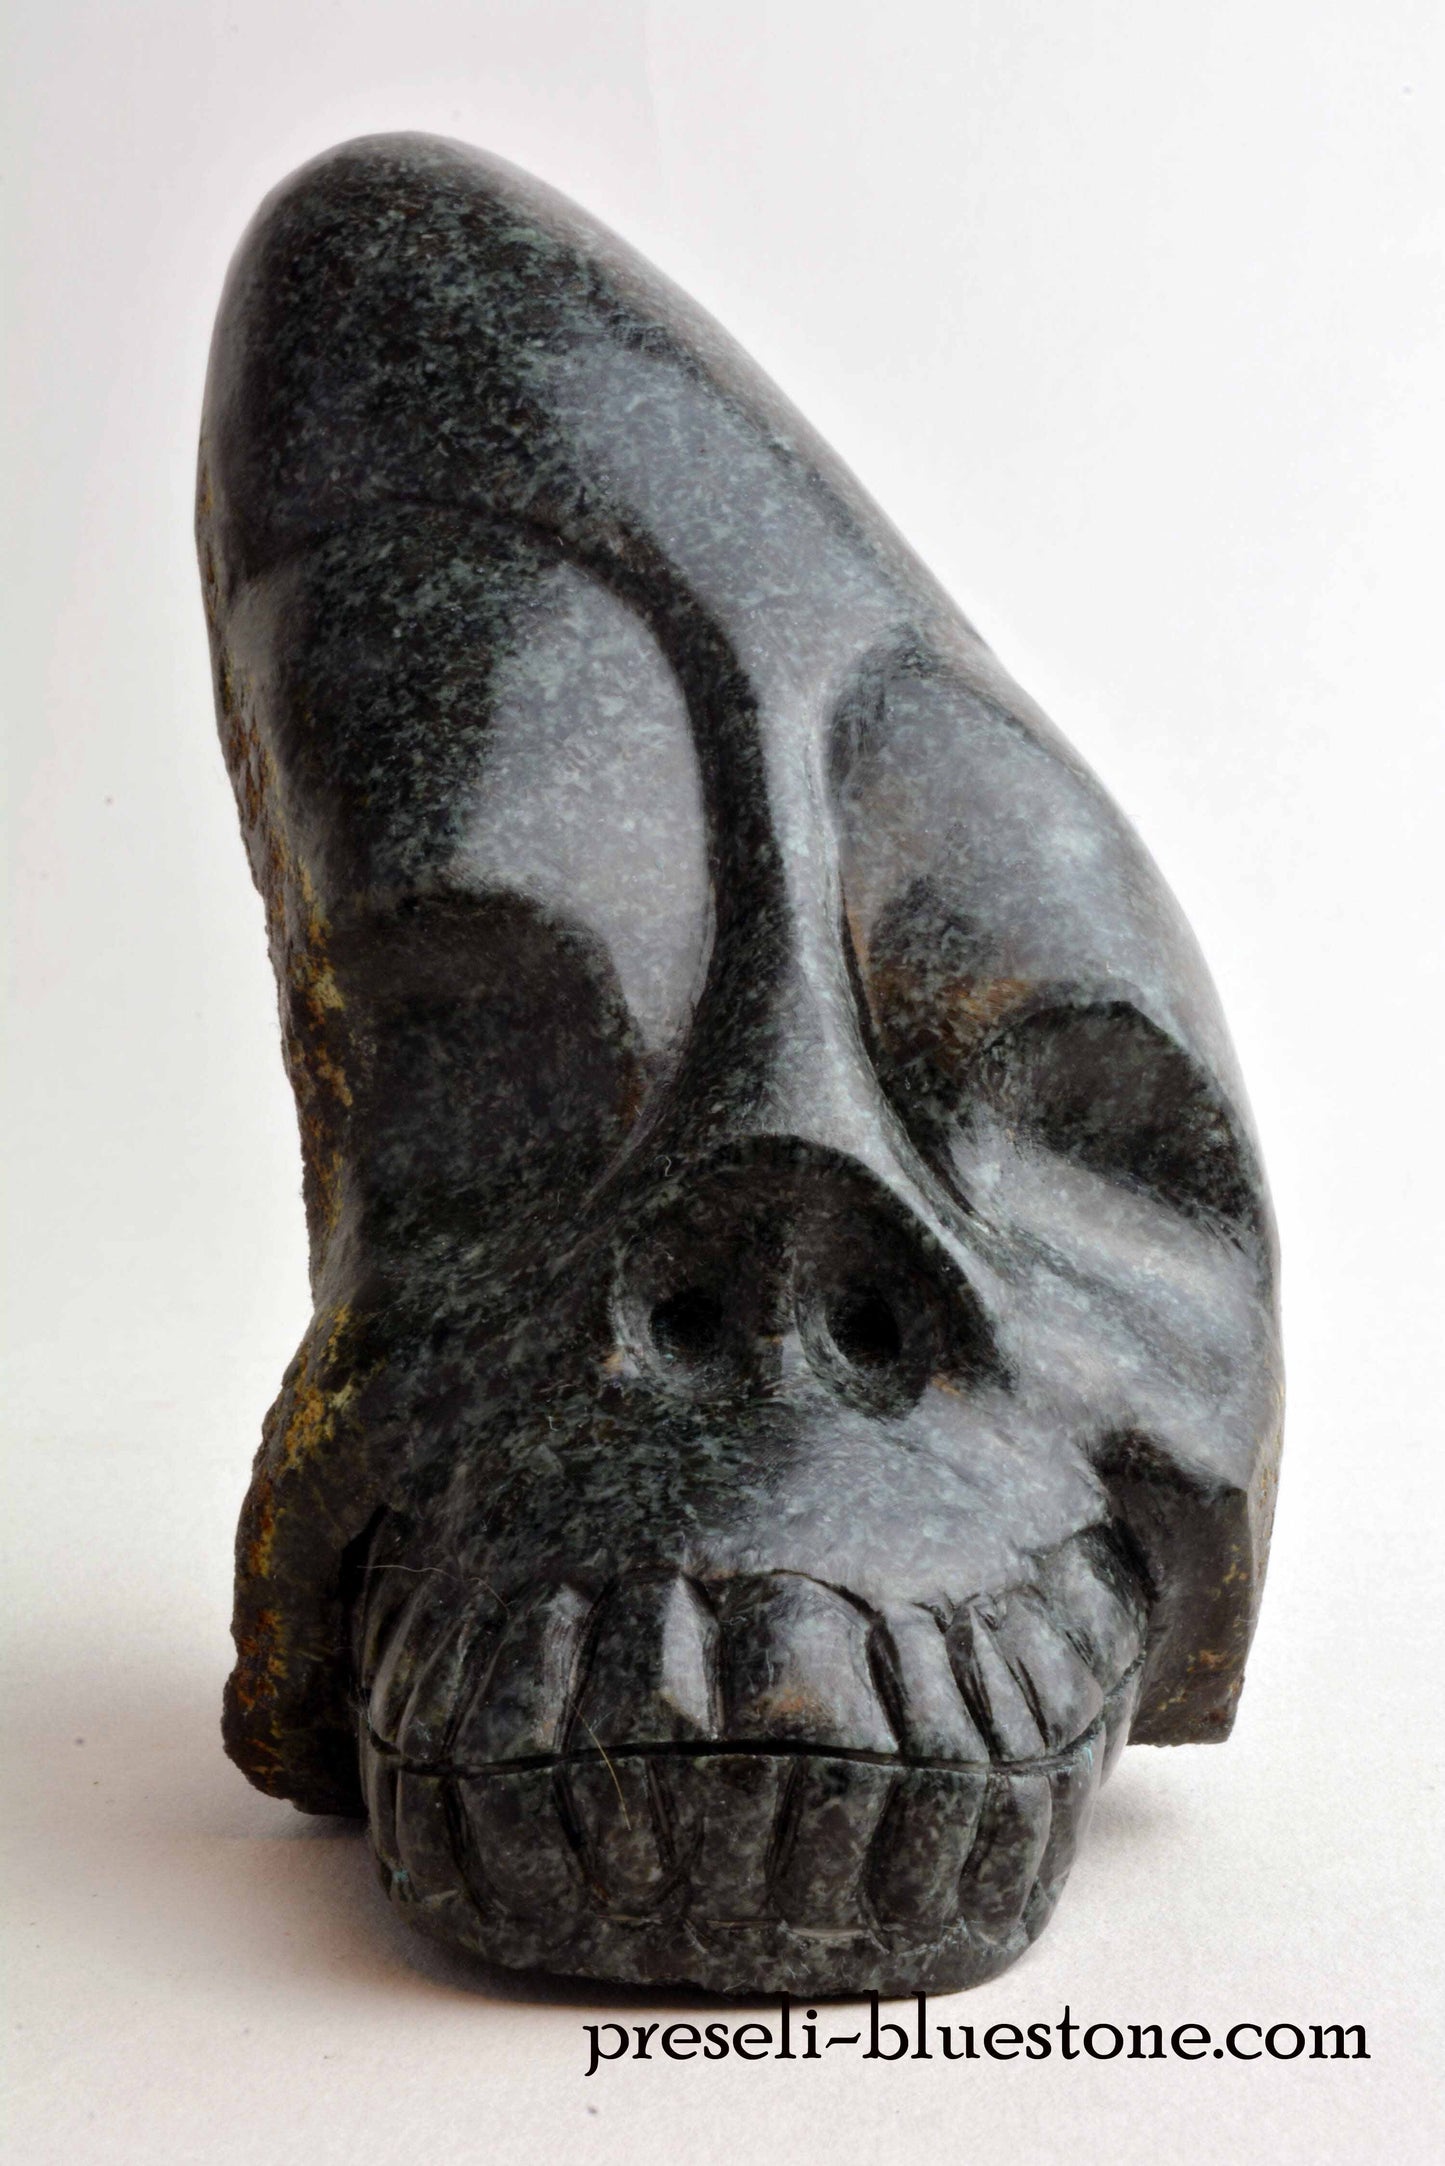 Unspotted Preseli Bluestone Skull